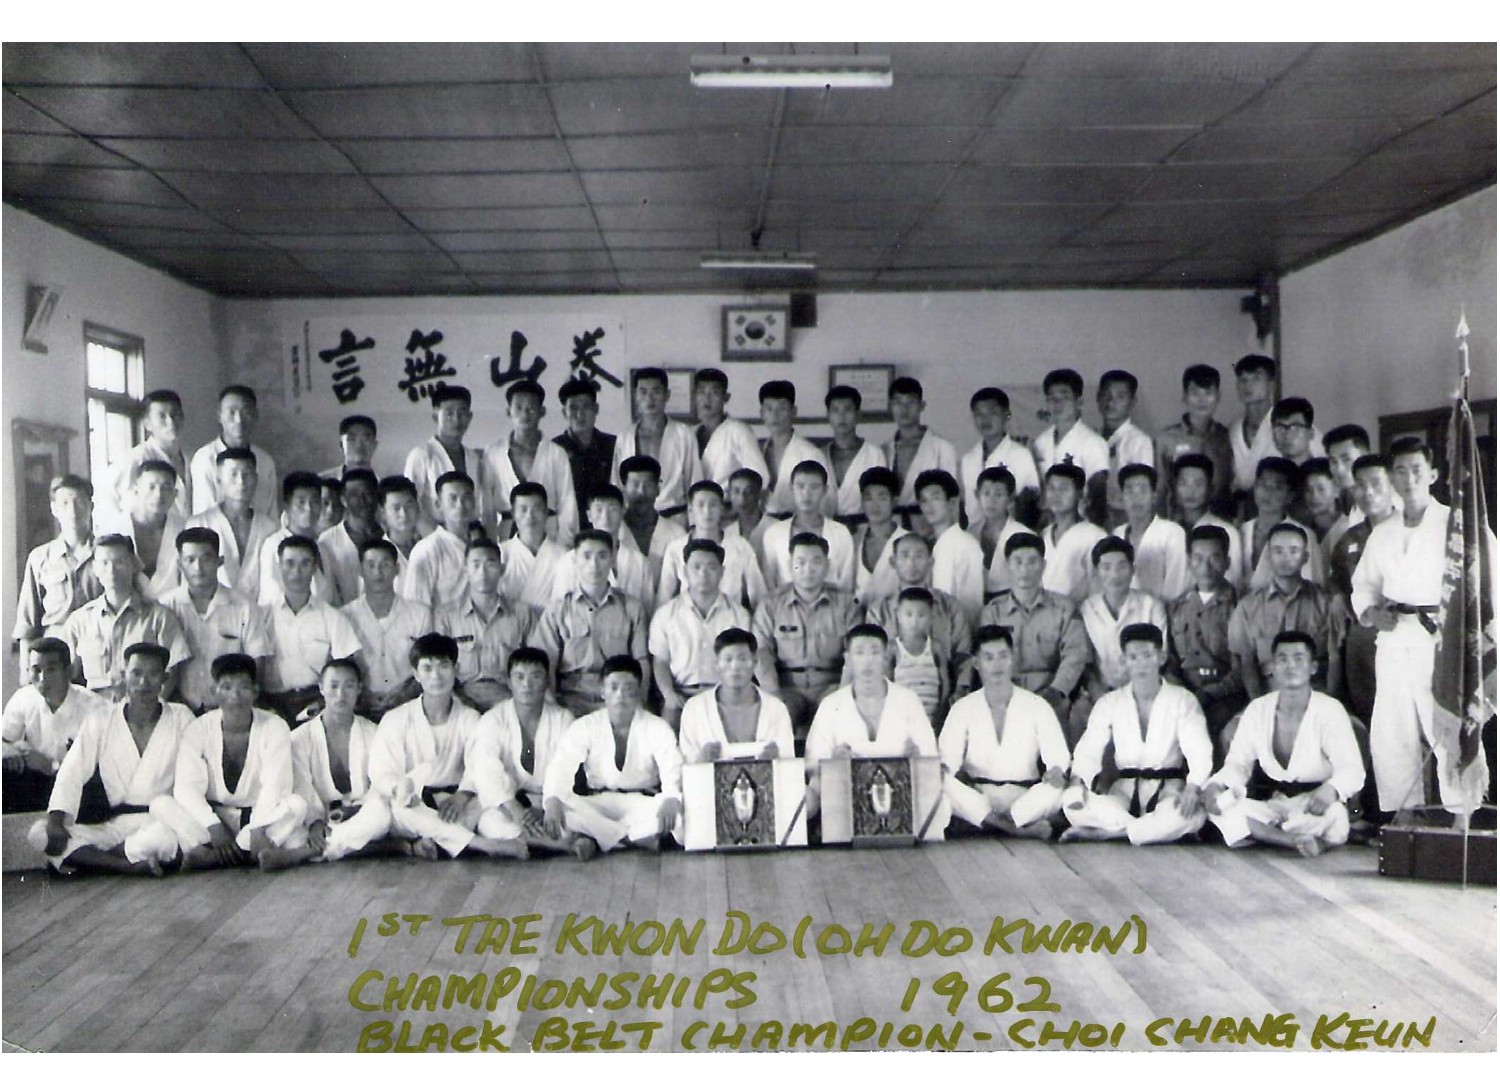 1st Tae Kwon Do Championship 1962